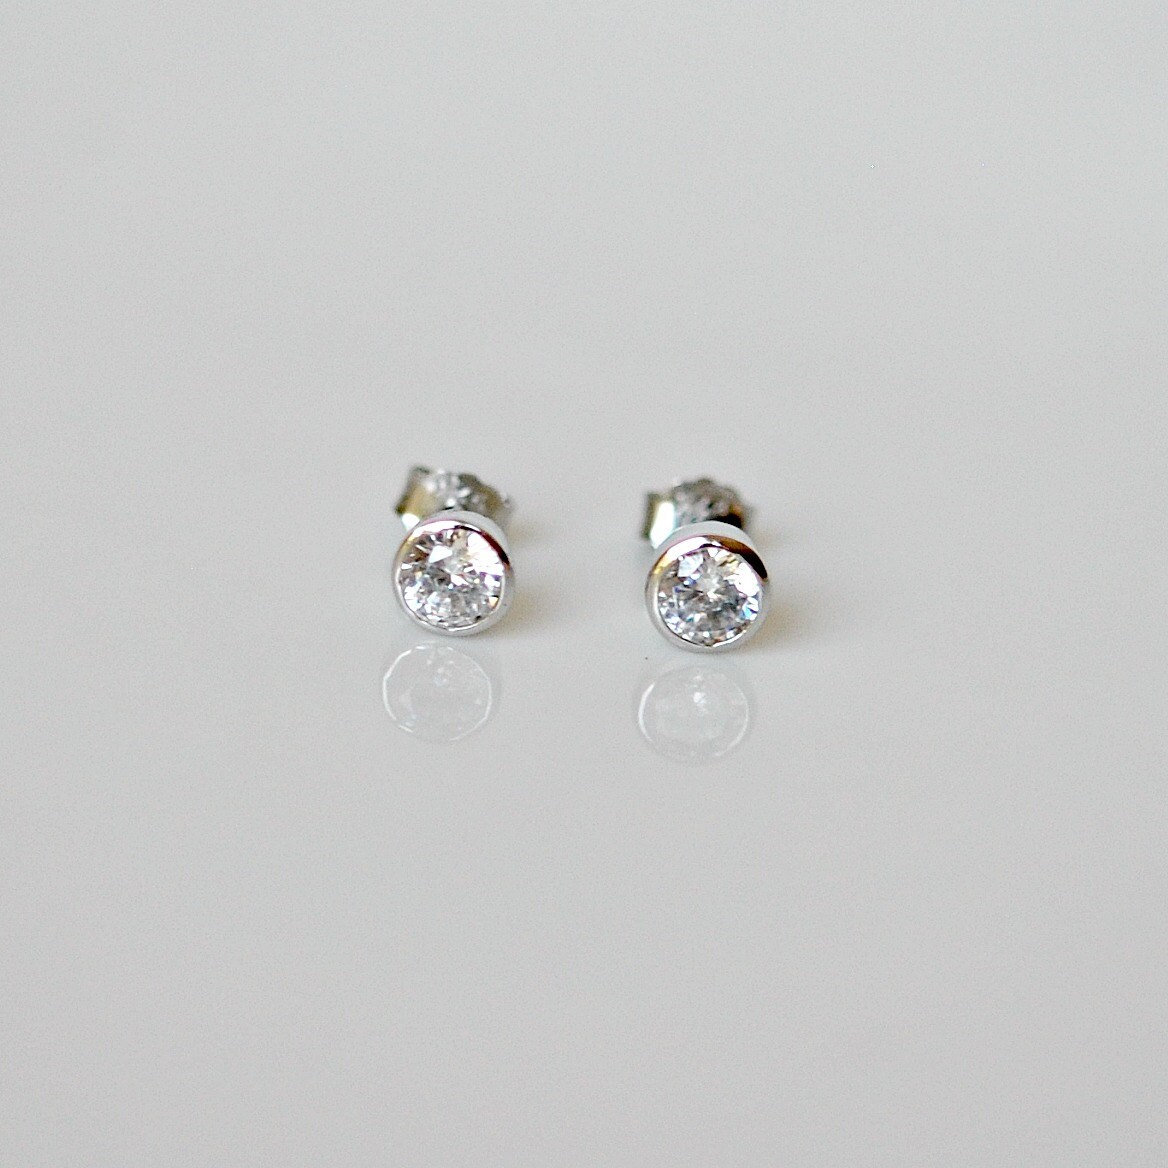 925 Sterling Silver Stud Earrings Cubic Zirconia Crystal Stud Earrings 6mm 